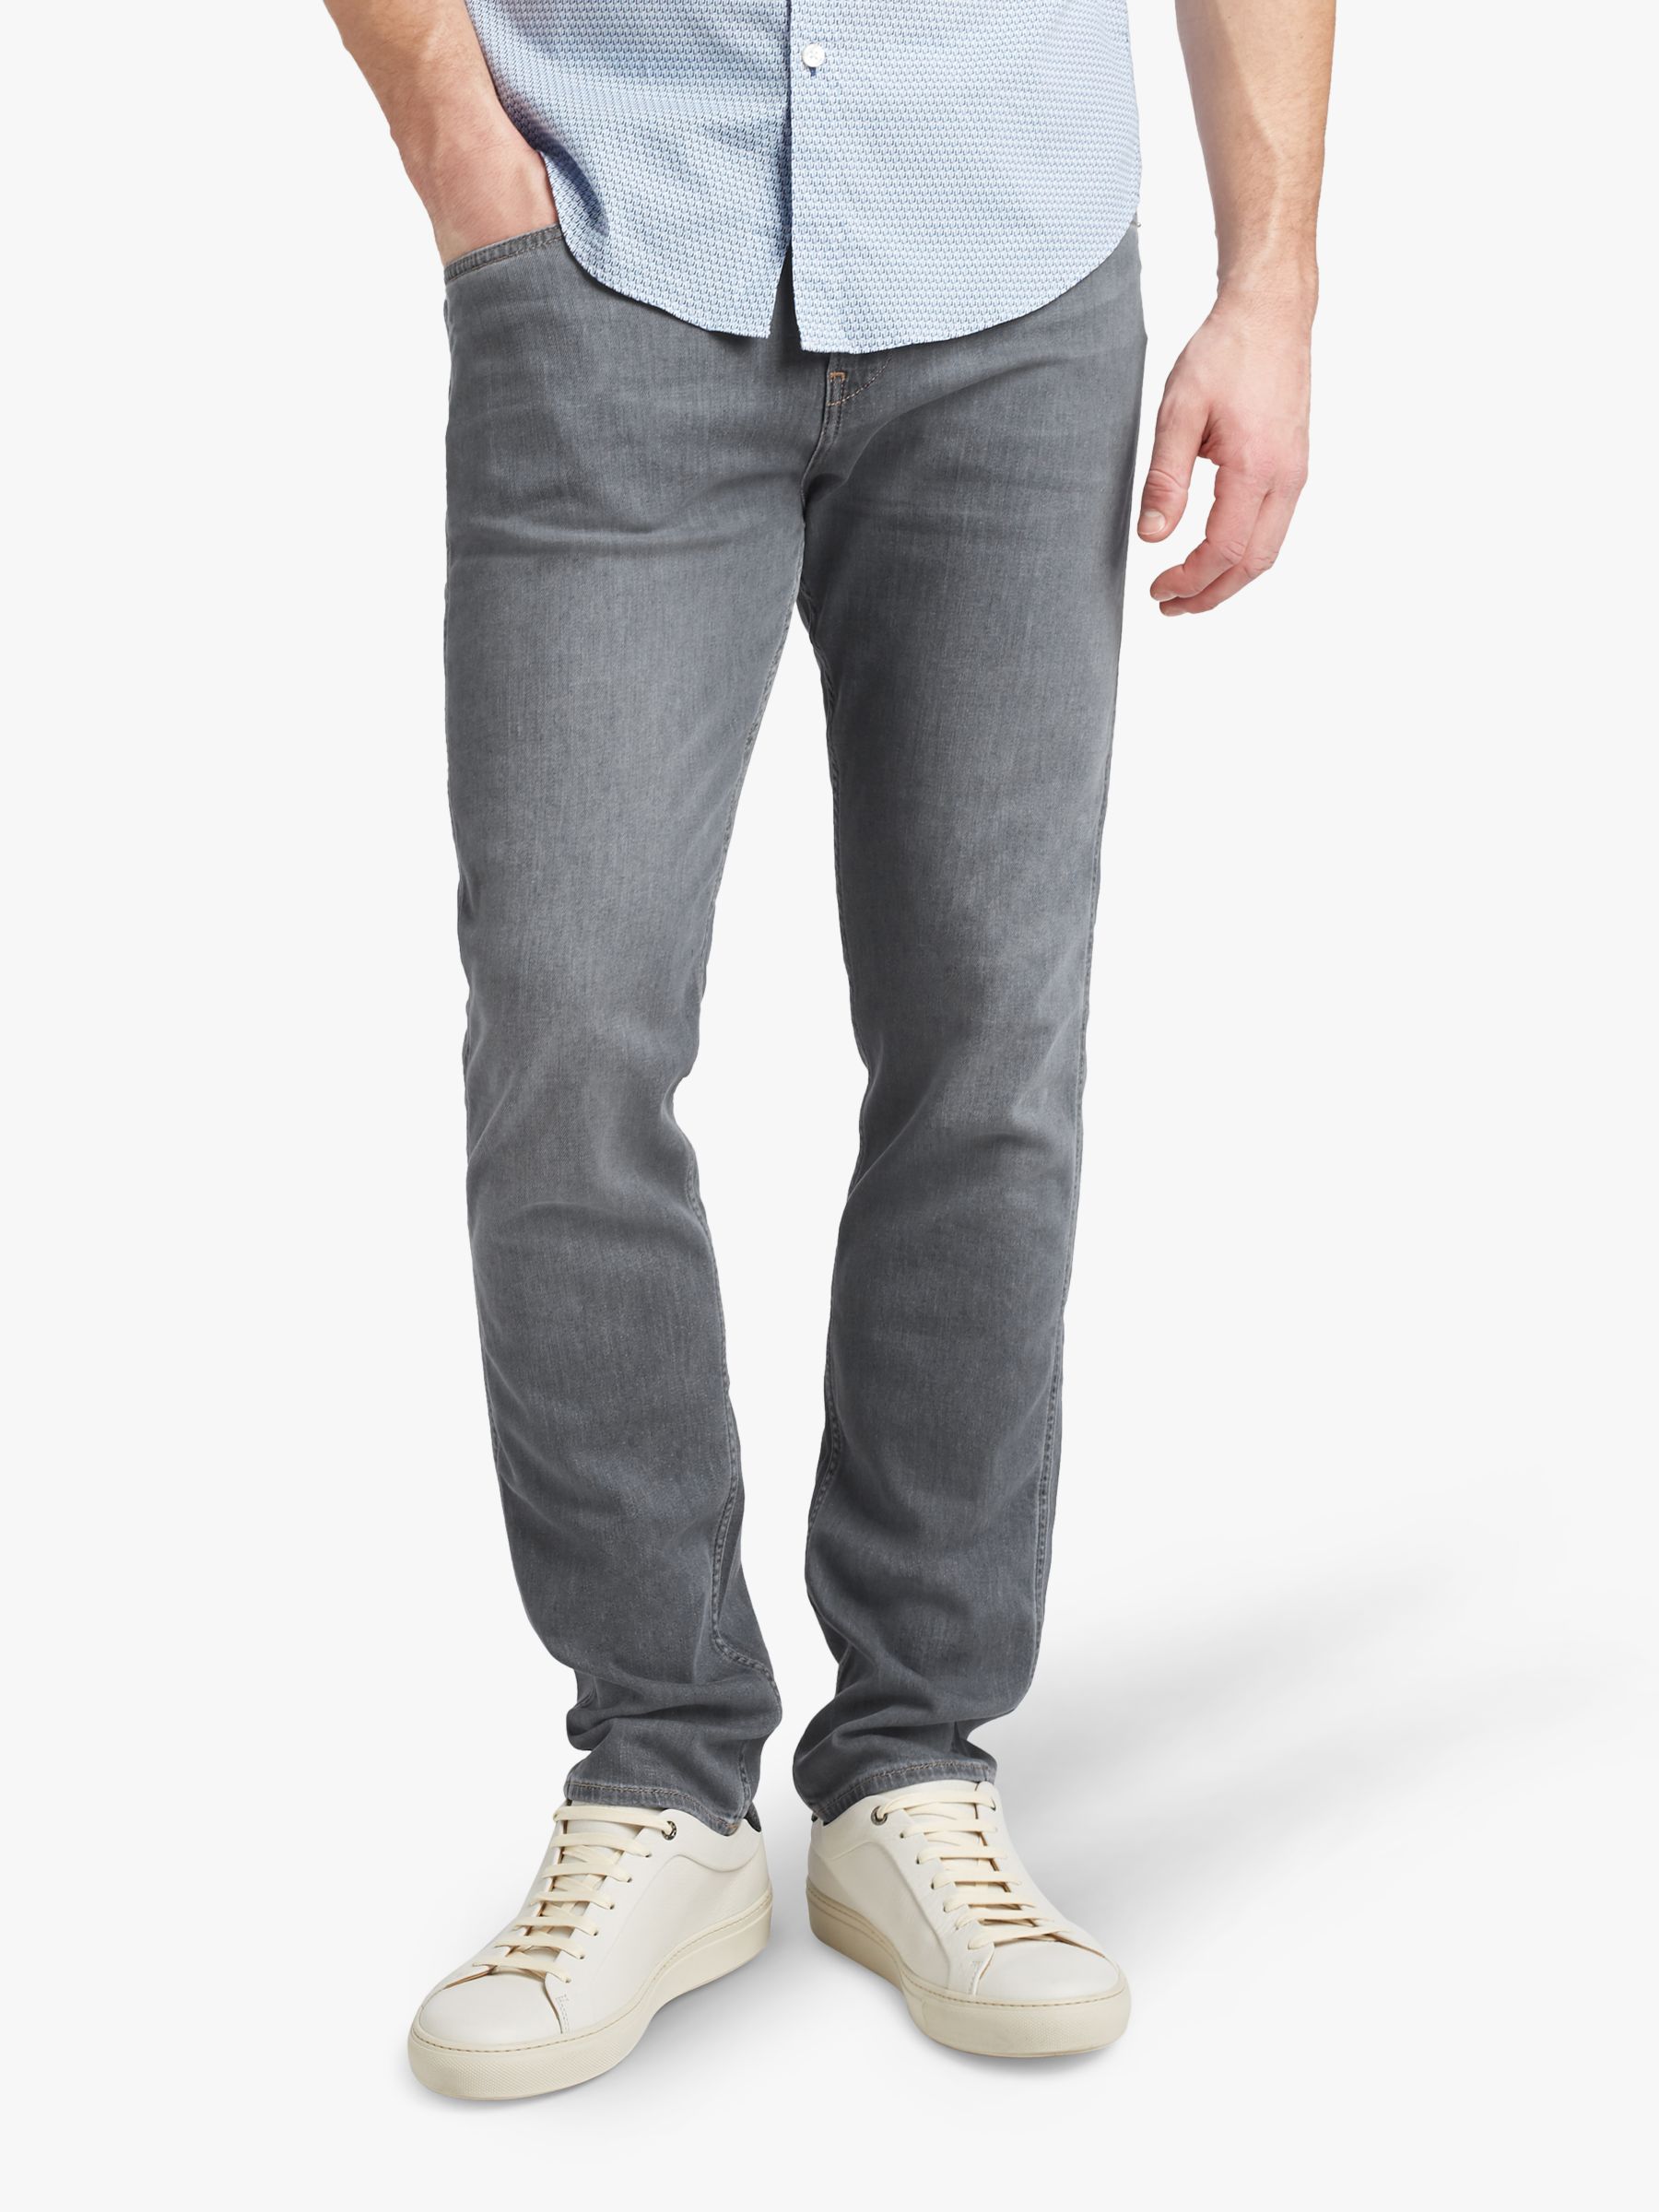 grey jeans slim